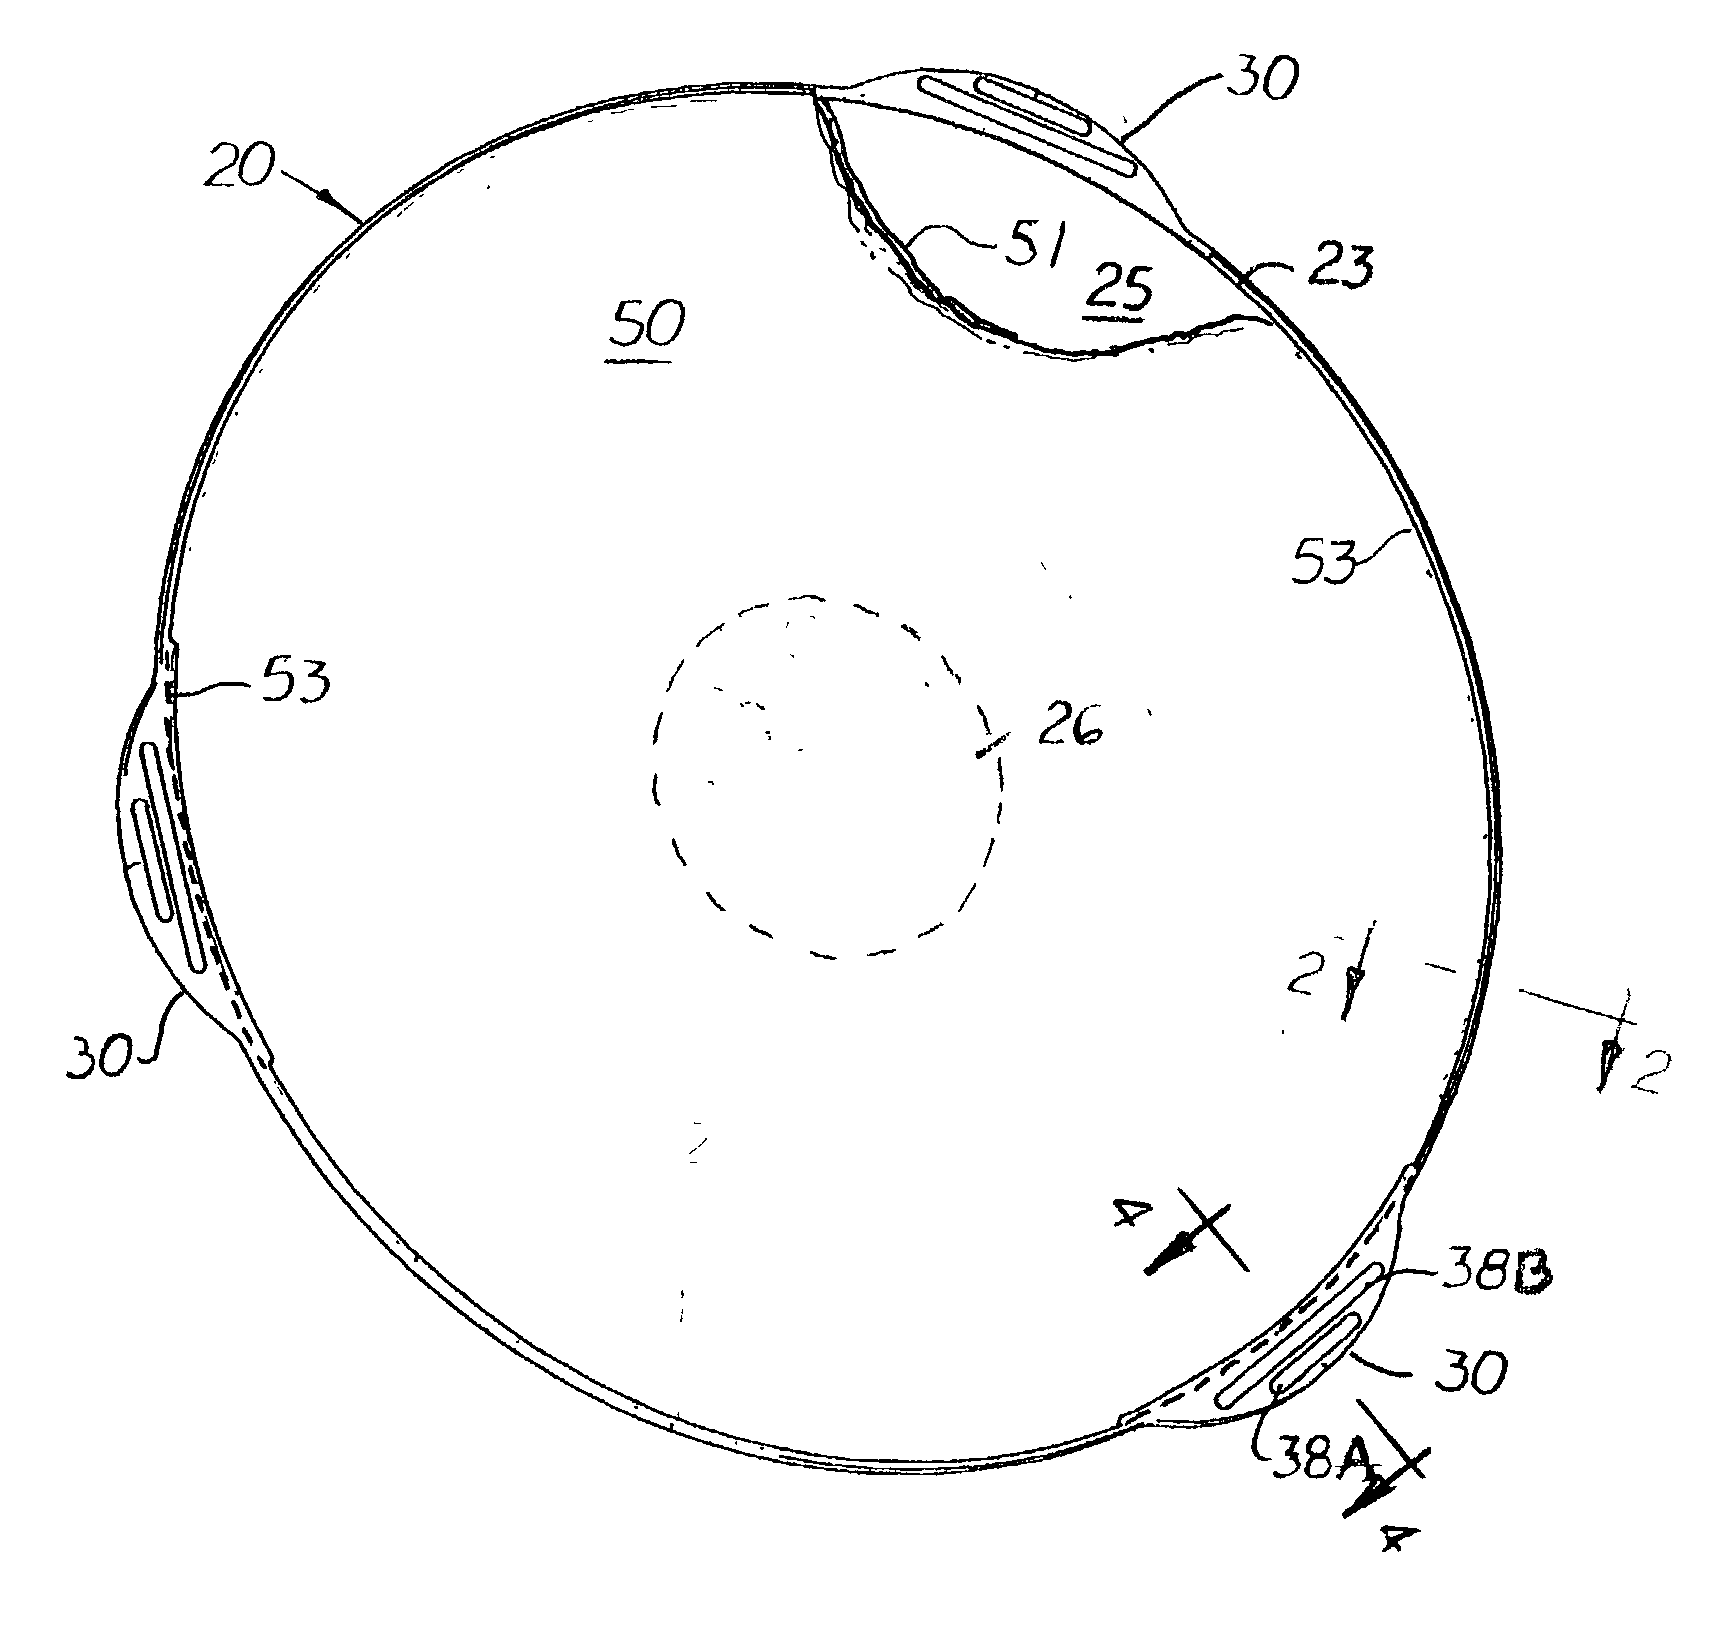 Optical disc holder